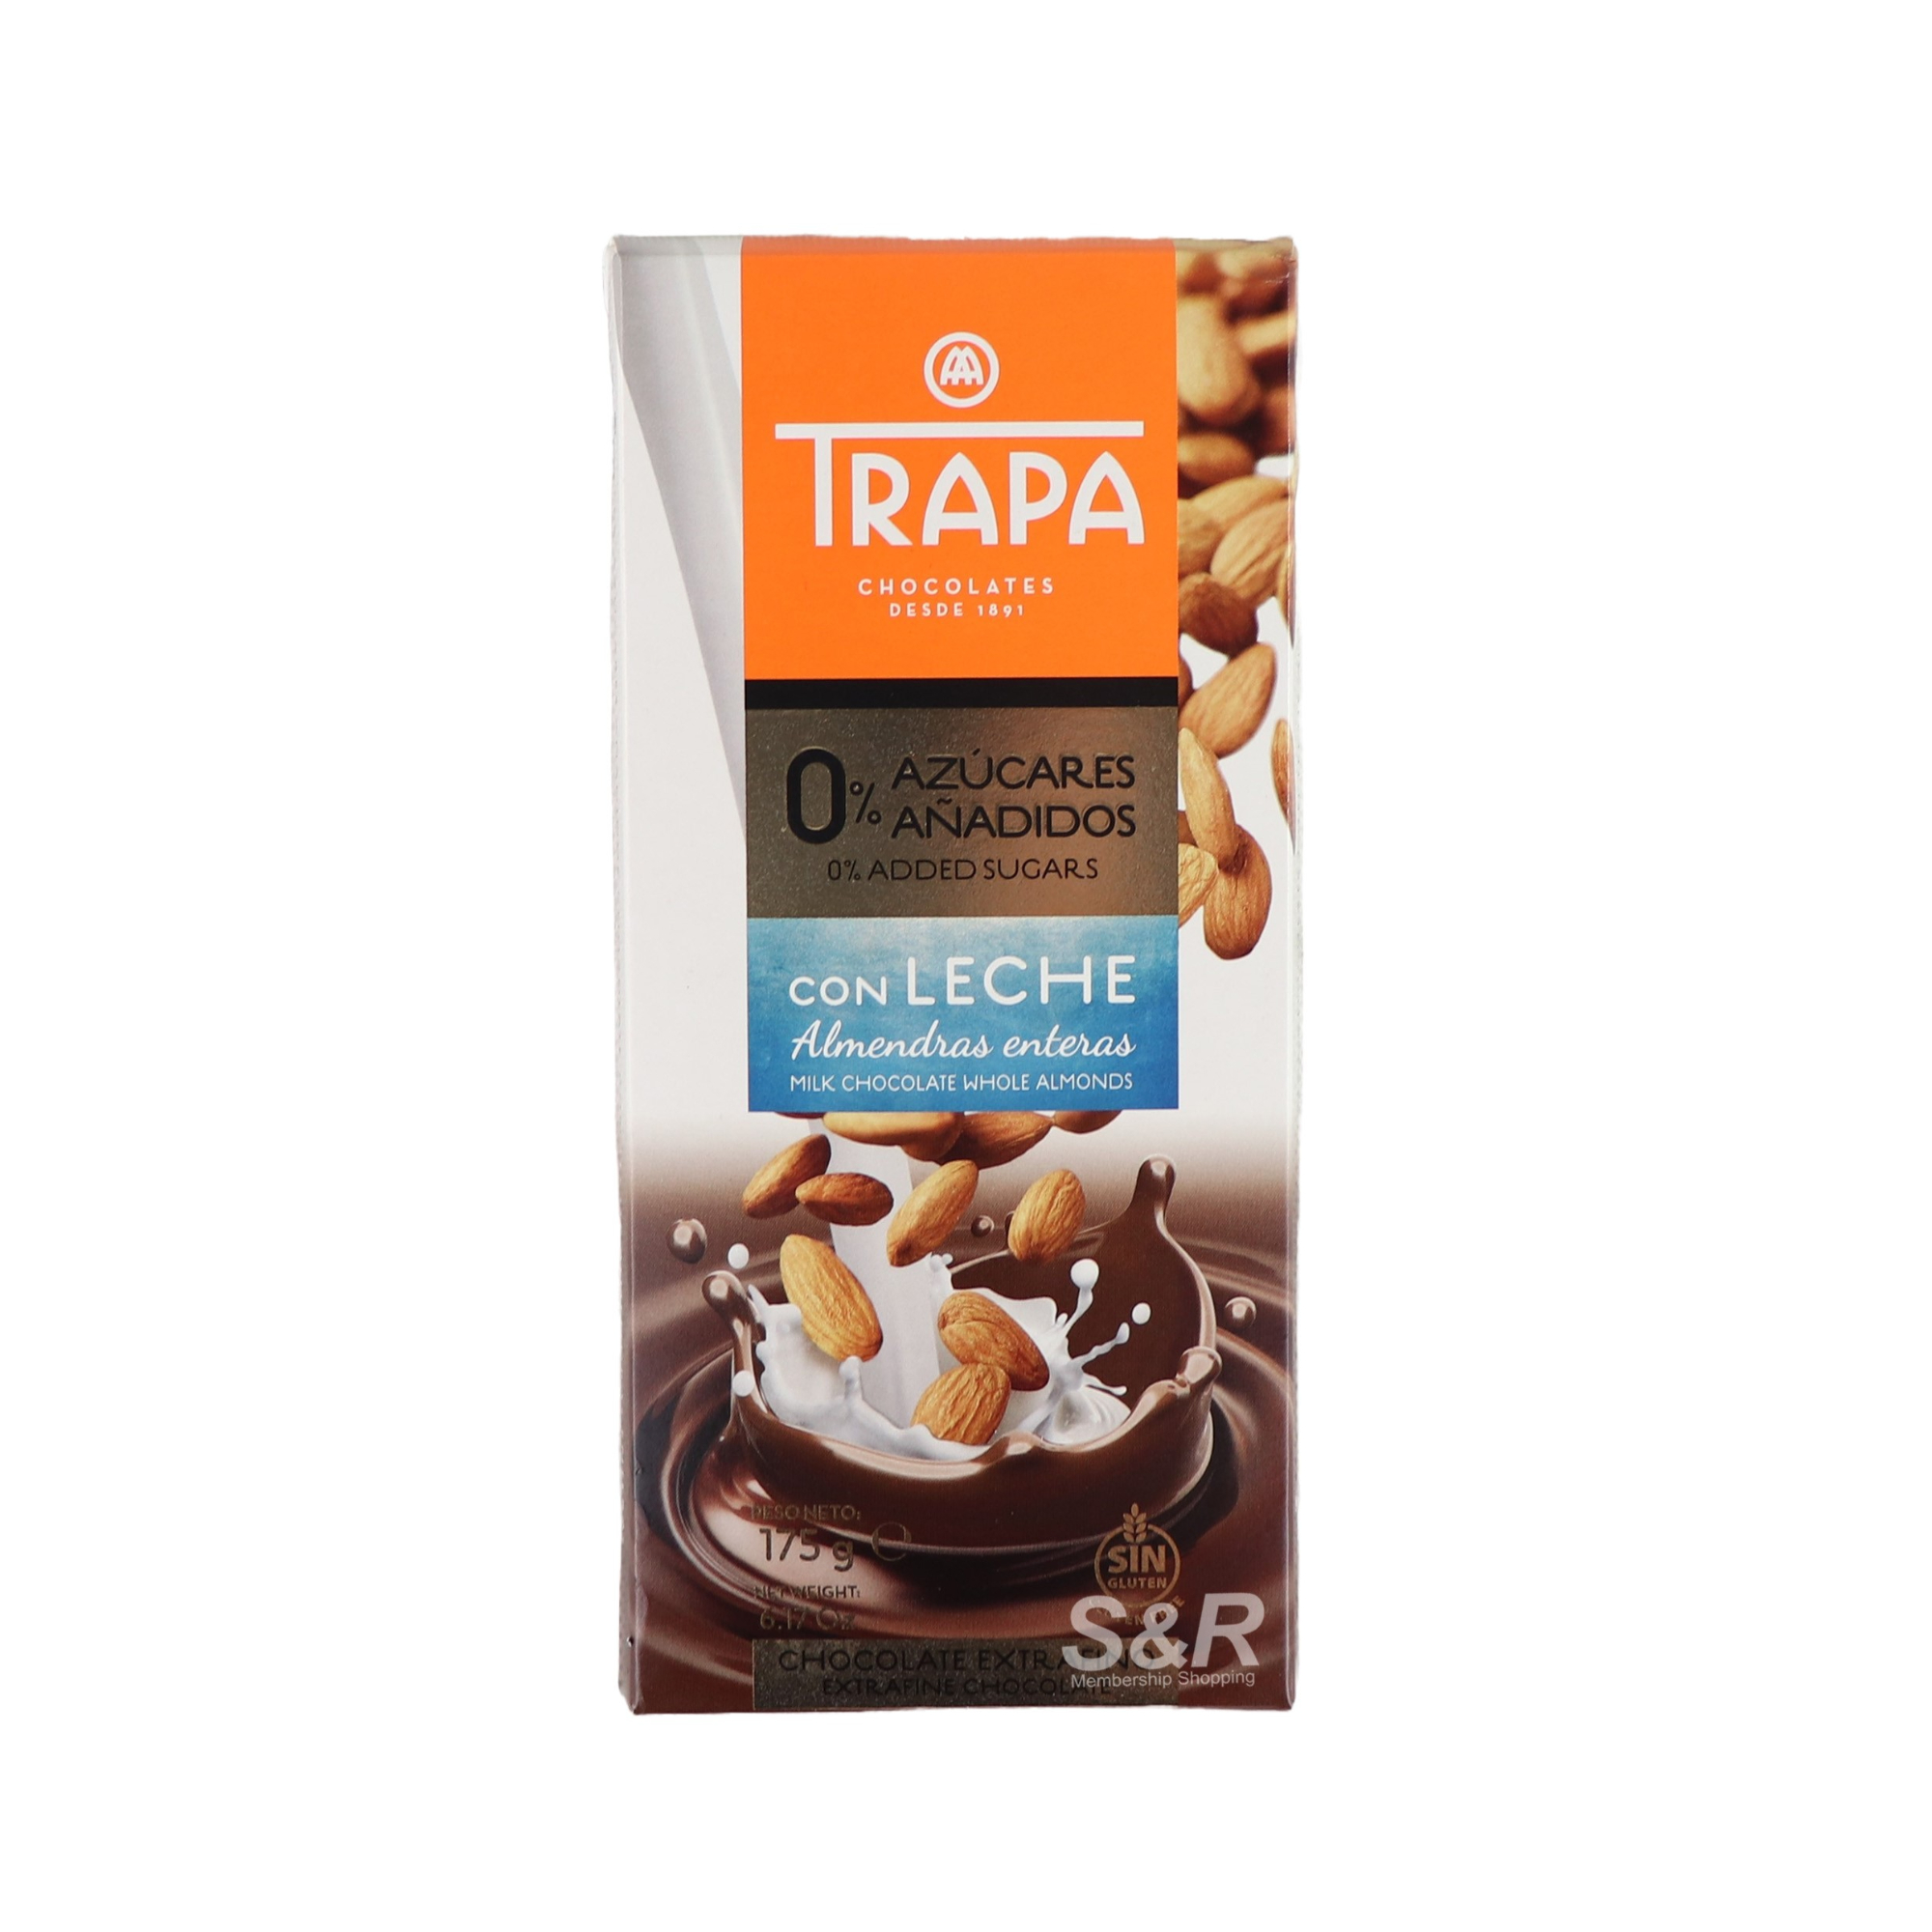 Trapa 0% Added Sugars Whole Almonds Milk Chocolate Bar 175g